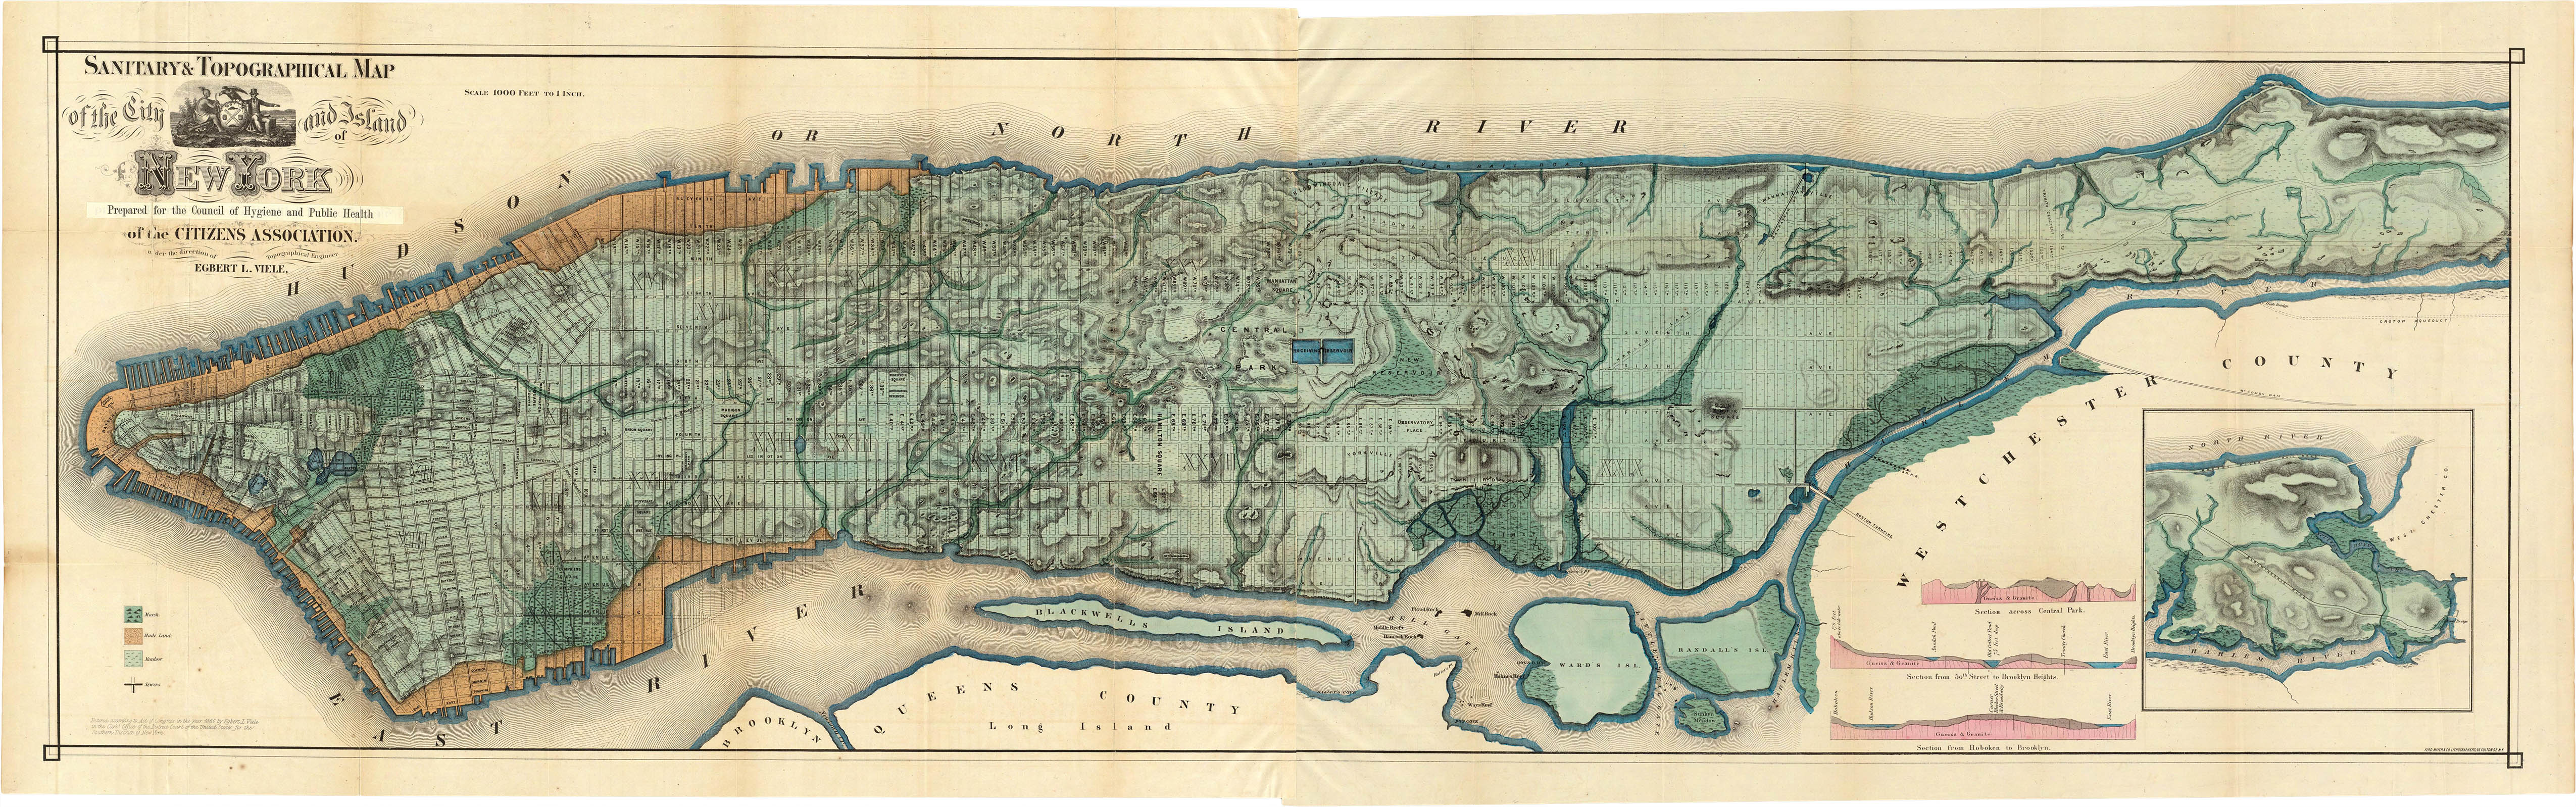 Manhattan Island 1891 Atlas of the City of New York NY Maps Book on CD 